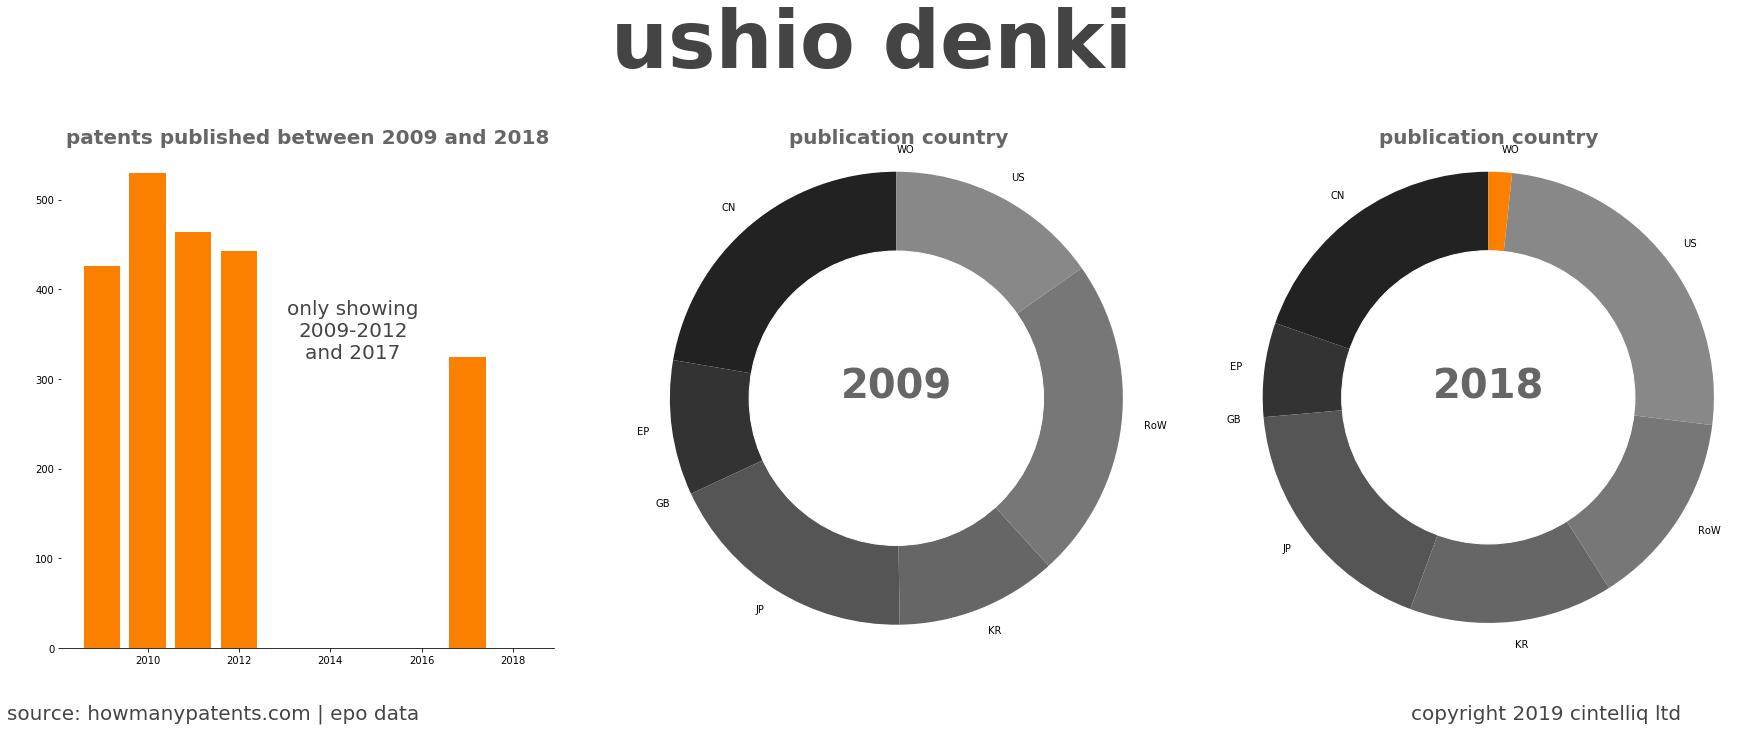 summary of patents for Ushio Denki